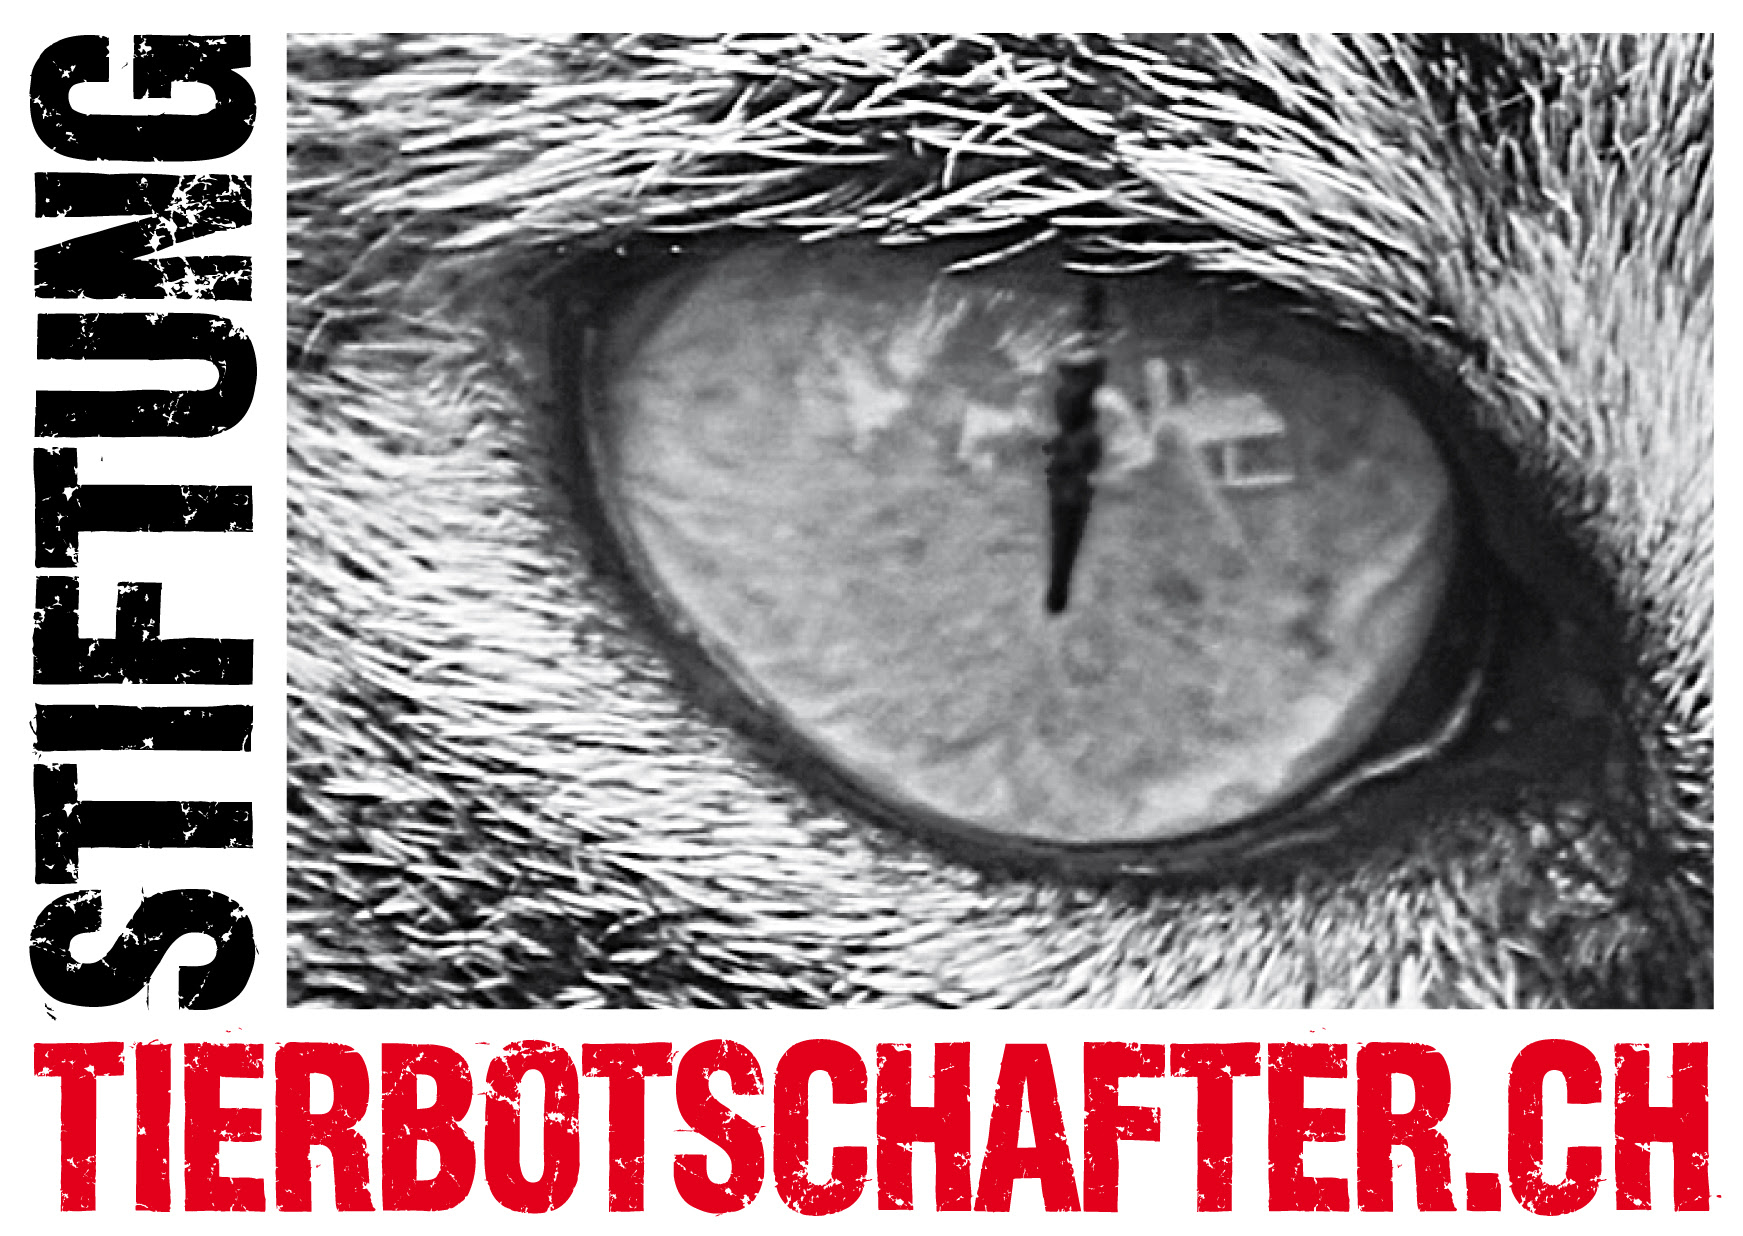 Tierbotschafter.ch